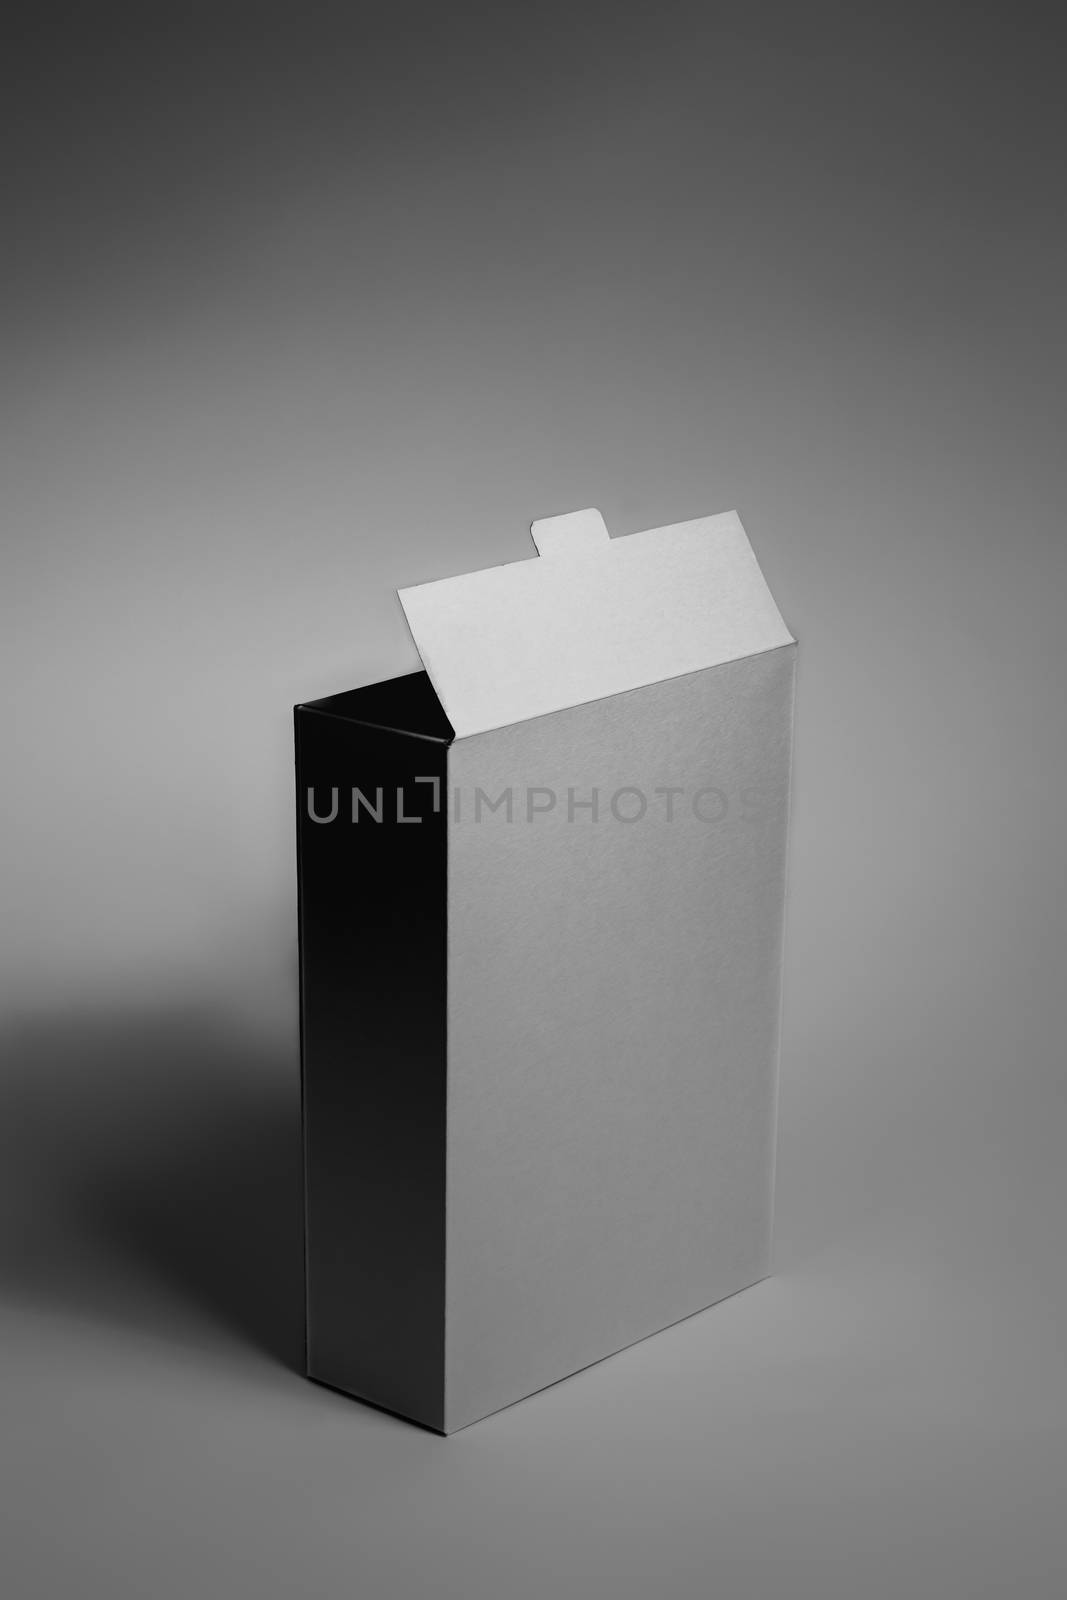 White generic box, studio shot. Blank carton food package, vertical view in low key